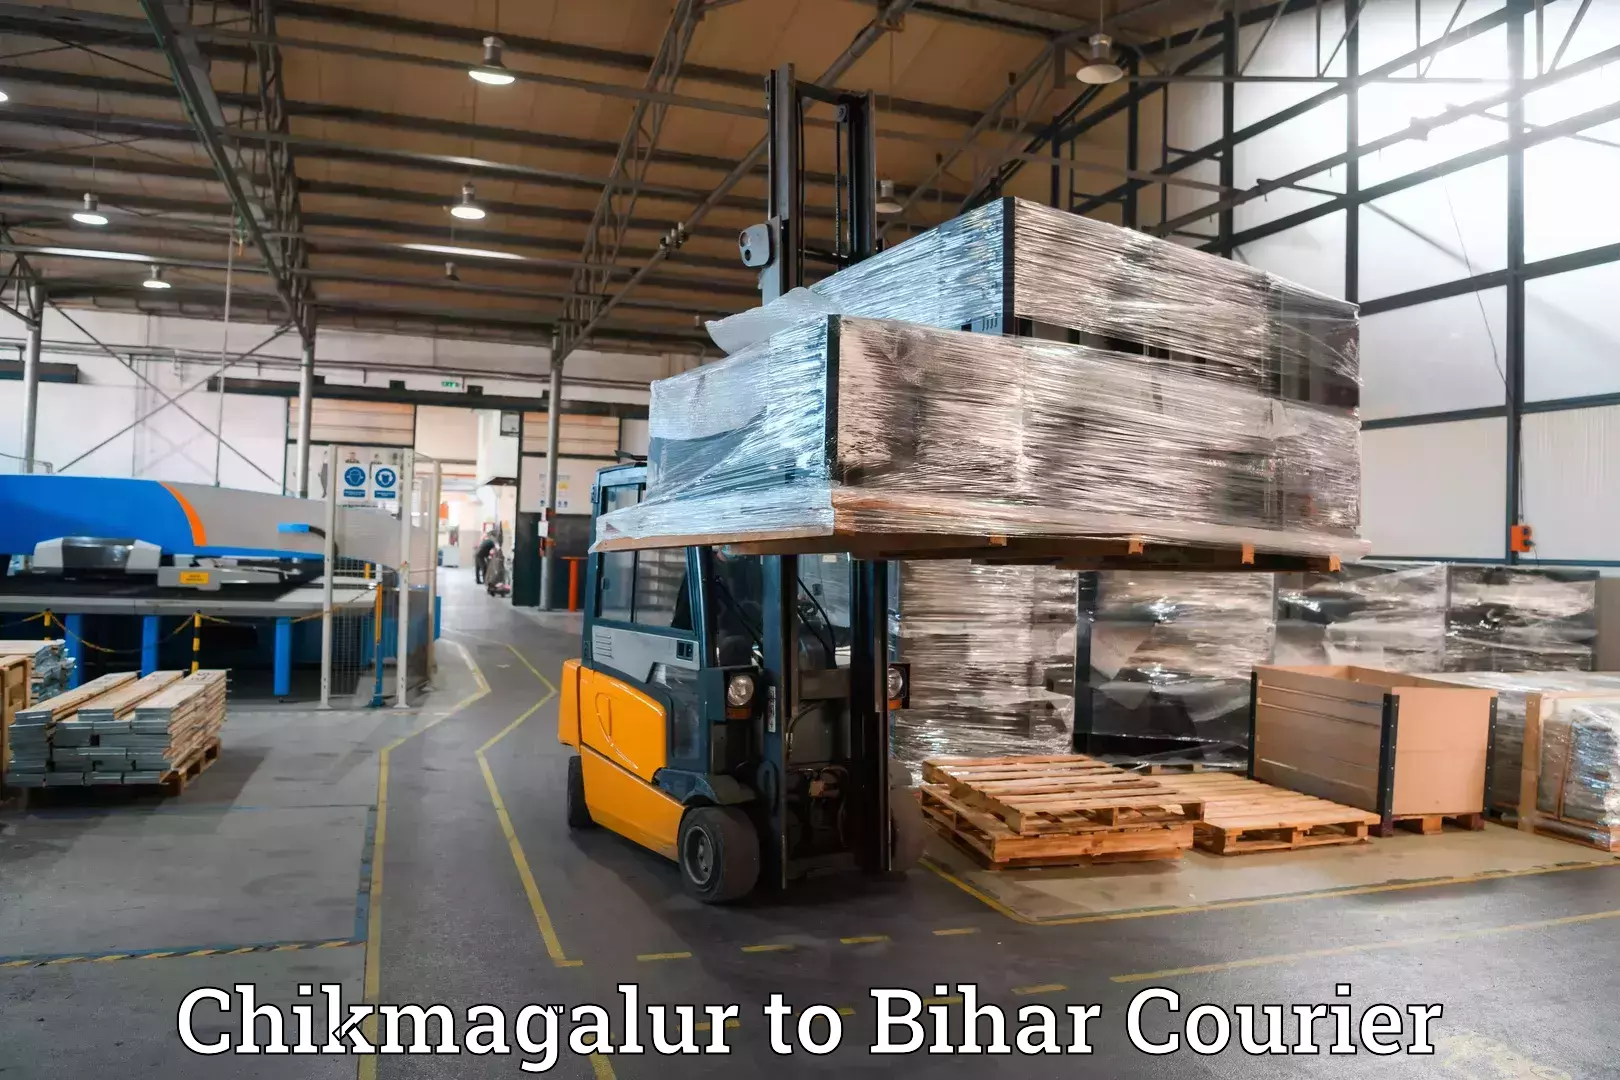 Luggage shipment processing Chikmagalur to Dhaka